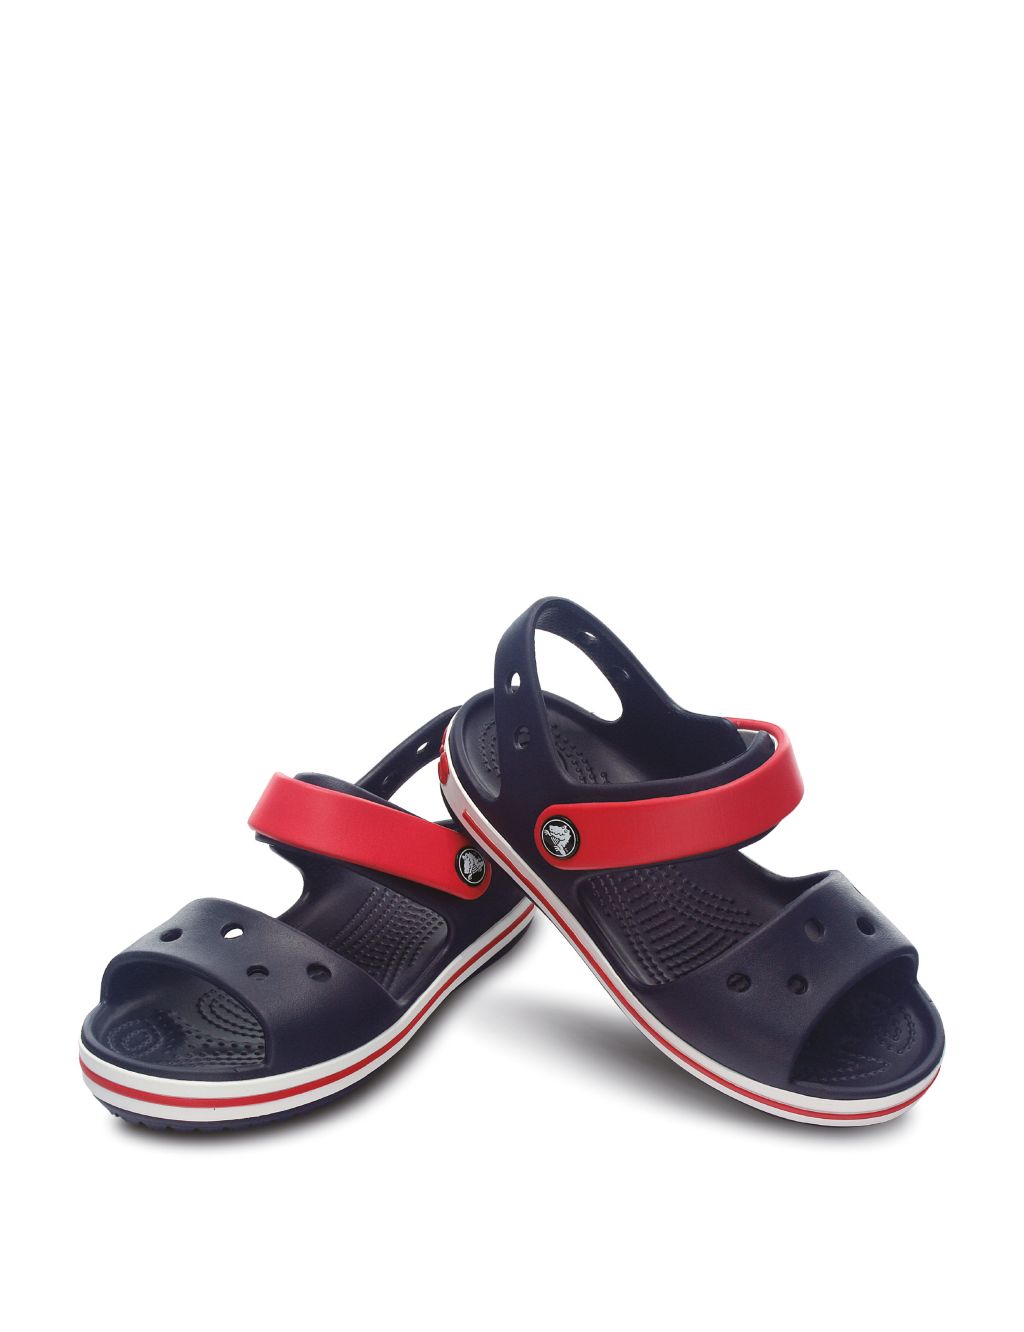 Kids' Crocband™ Riptape Sandals (4 Small - 3 Large) image 6